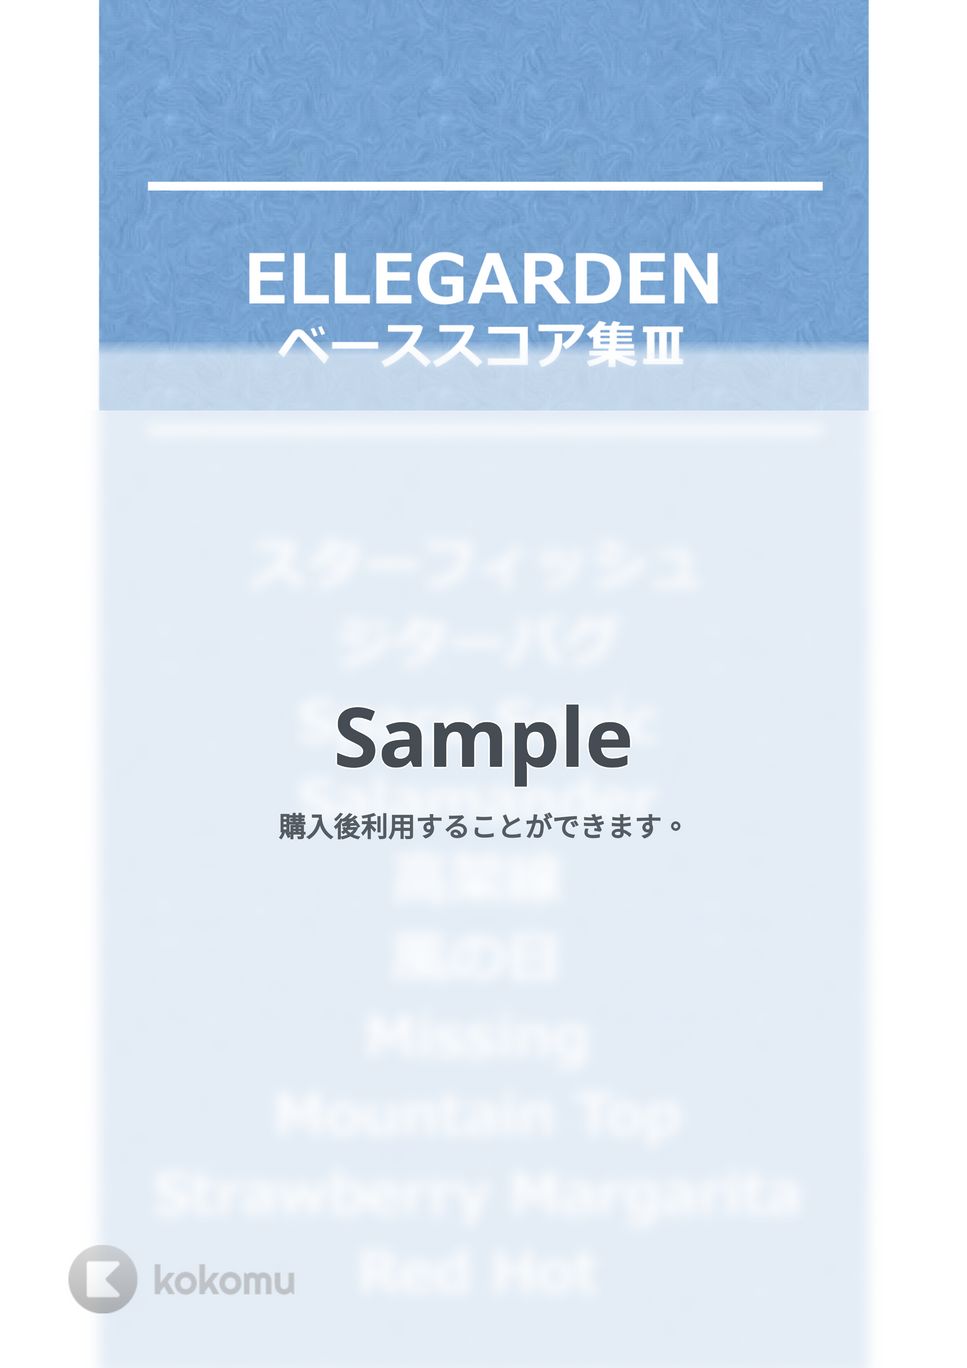 ELLEGARDEN - ELLEGARDEN ベースTAB譜面 10曲セット集Ⅰ by たぶべー